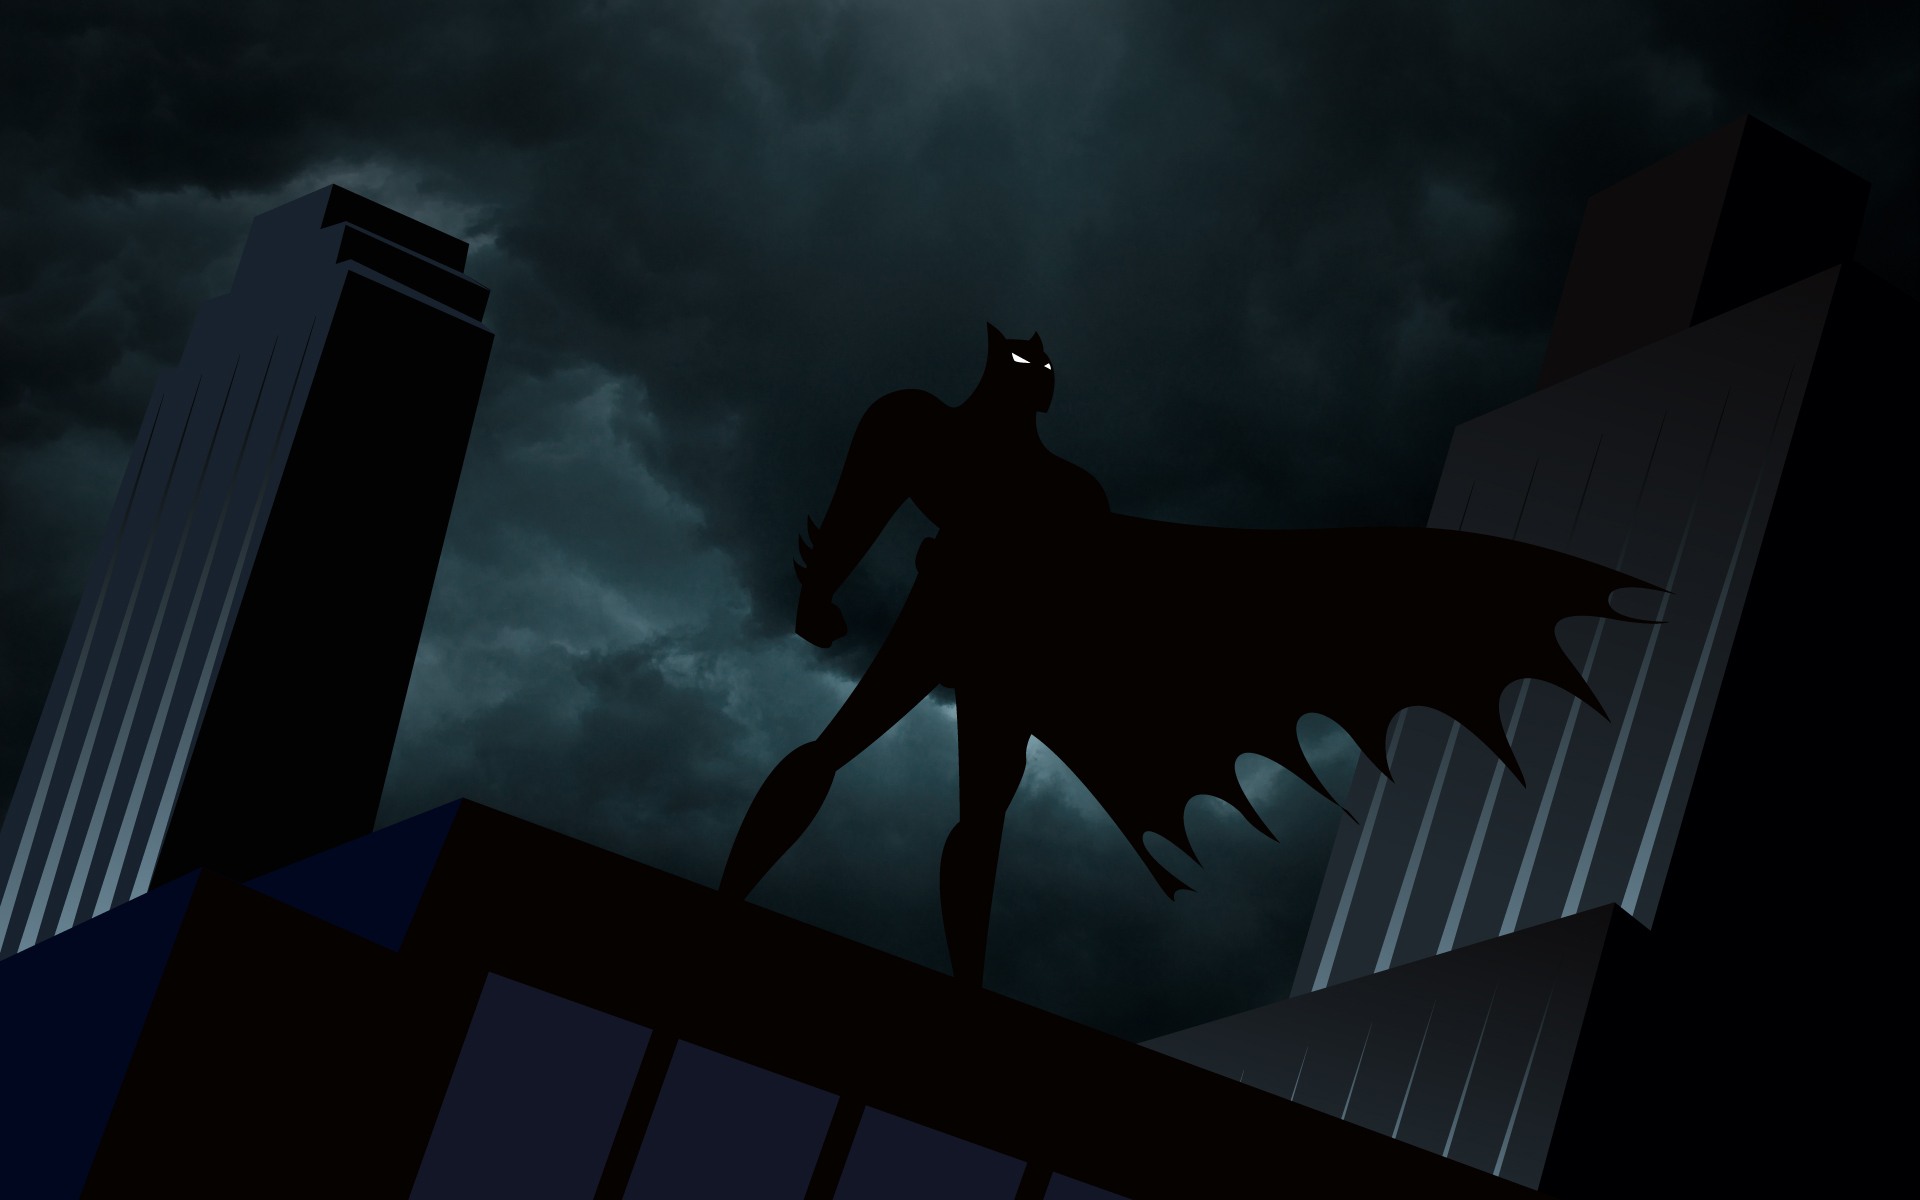 Batman animated cartoon background